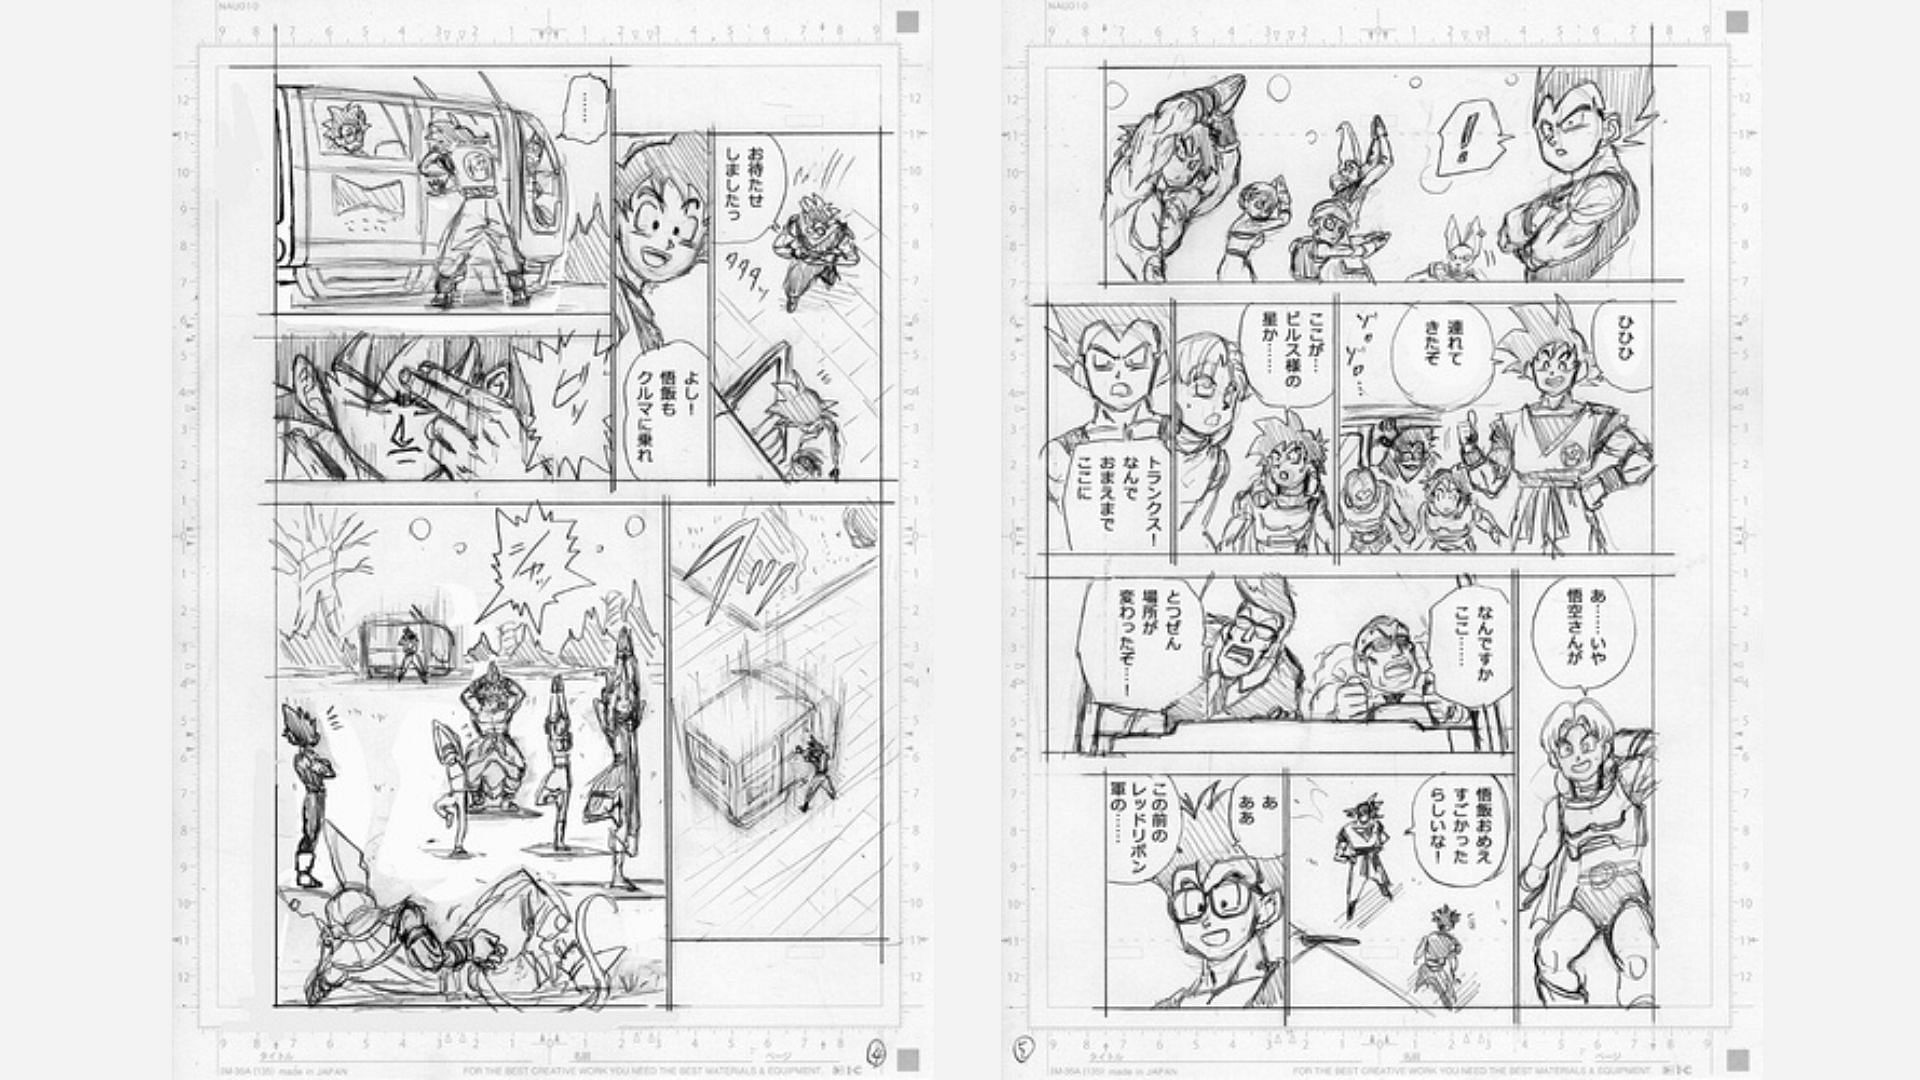 Sneak-Peek images from Dragon Ball Super chapter 102 storyboard (Image via Shueisha)